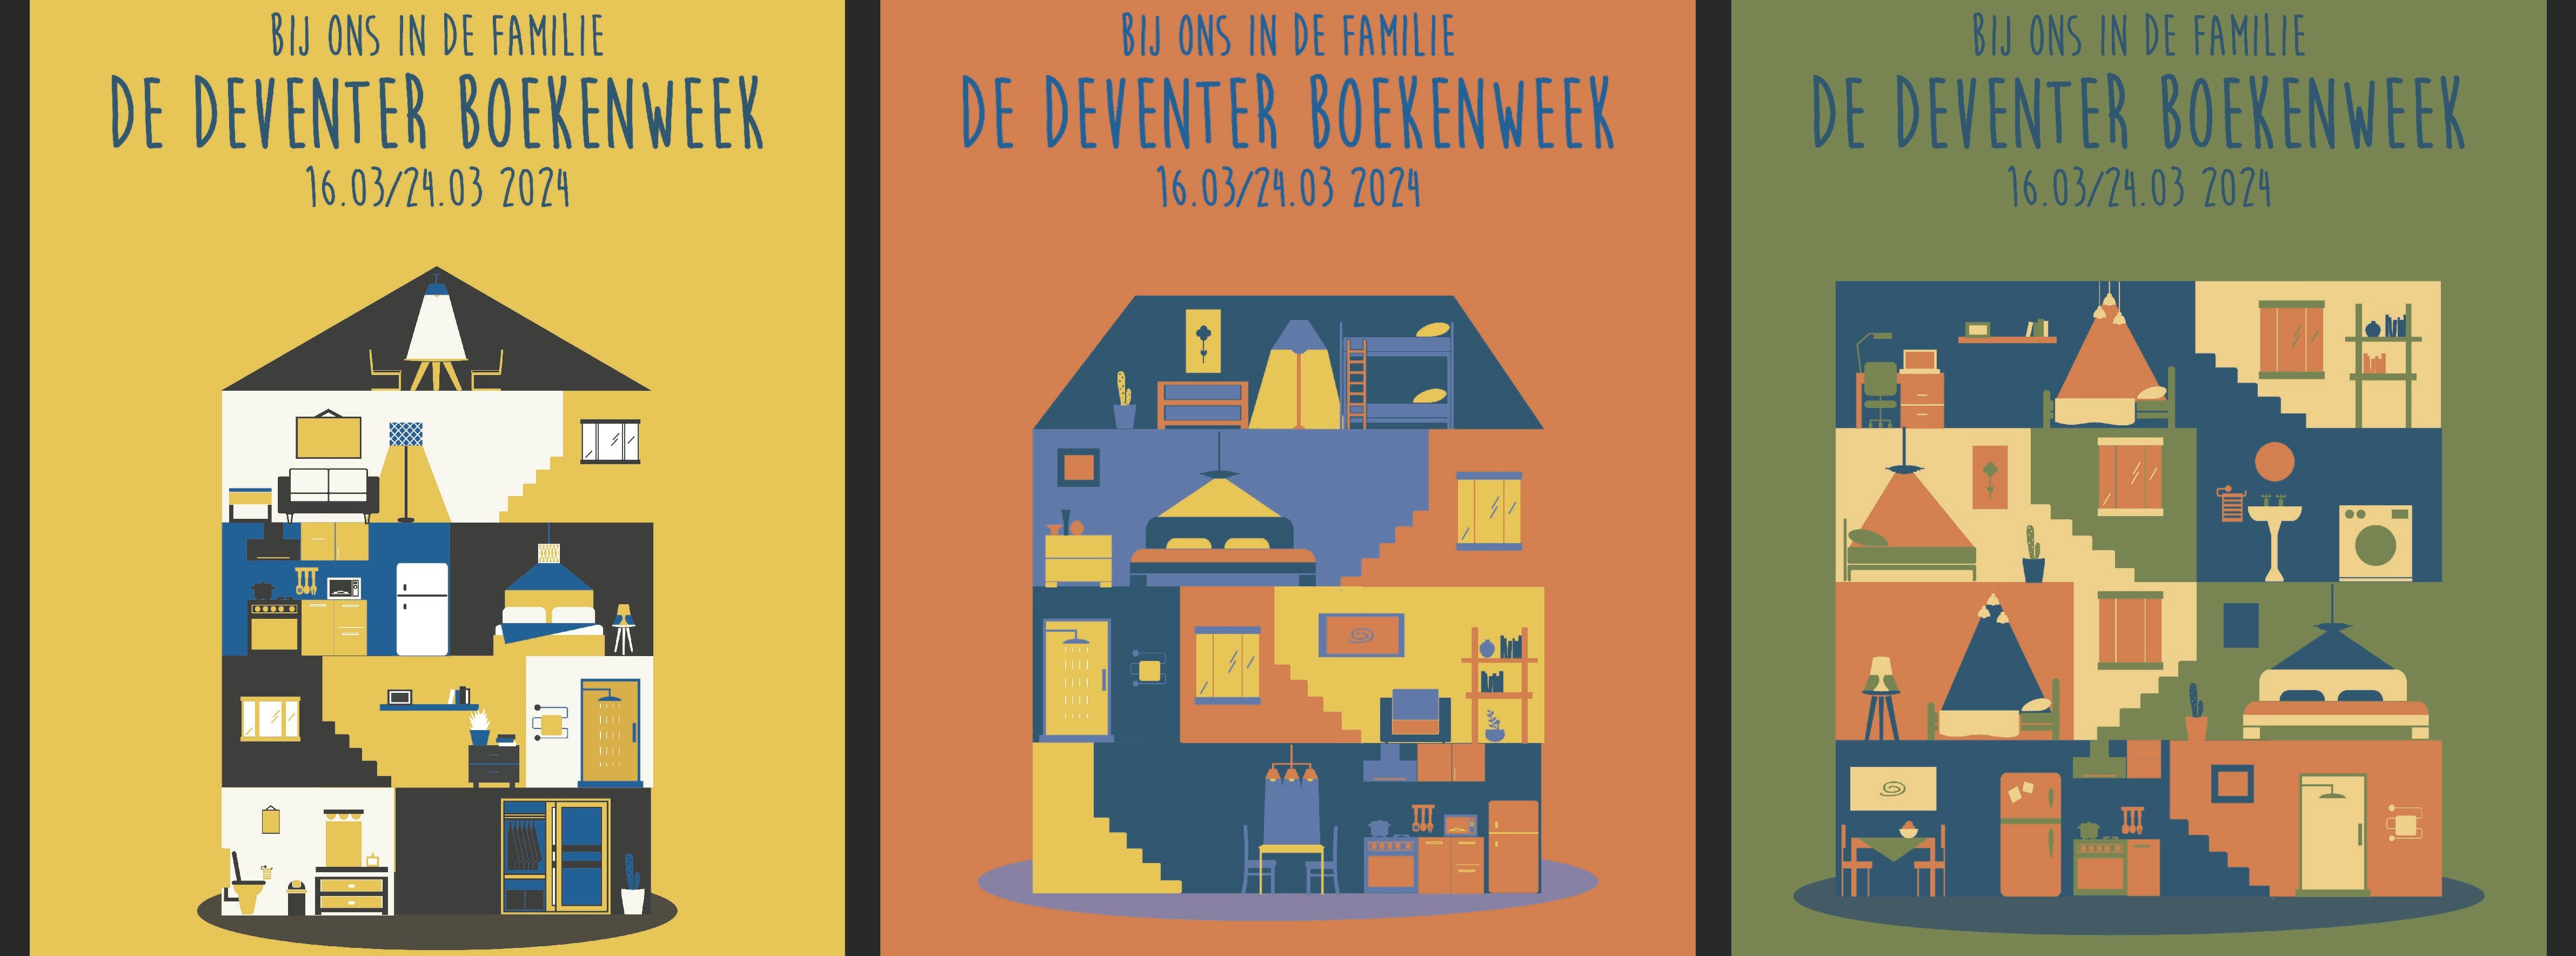 Stichting Deventer Boekenweek